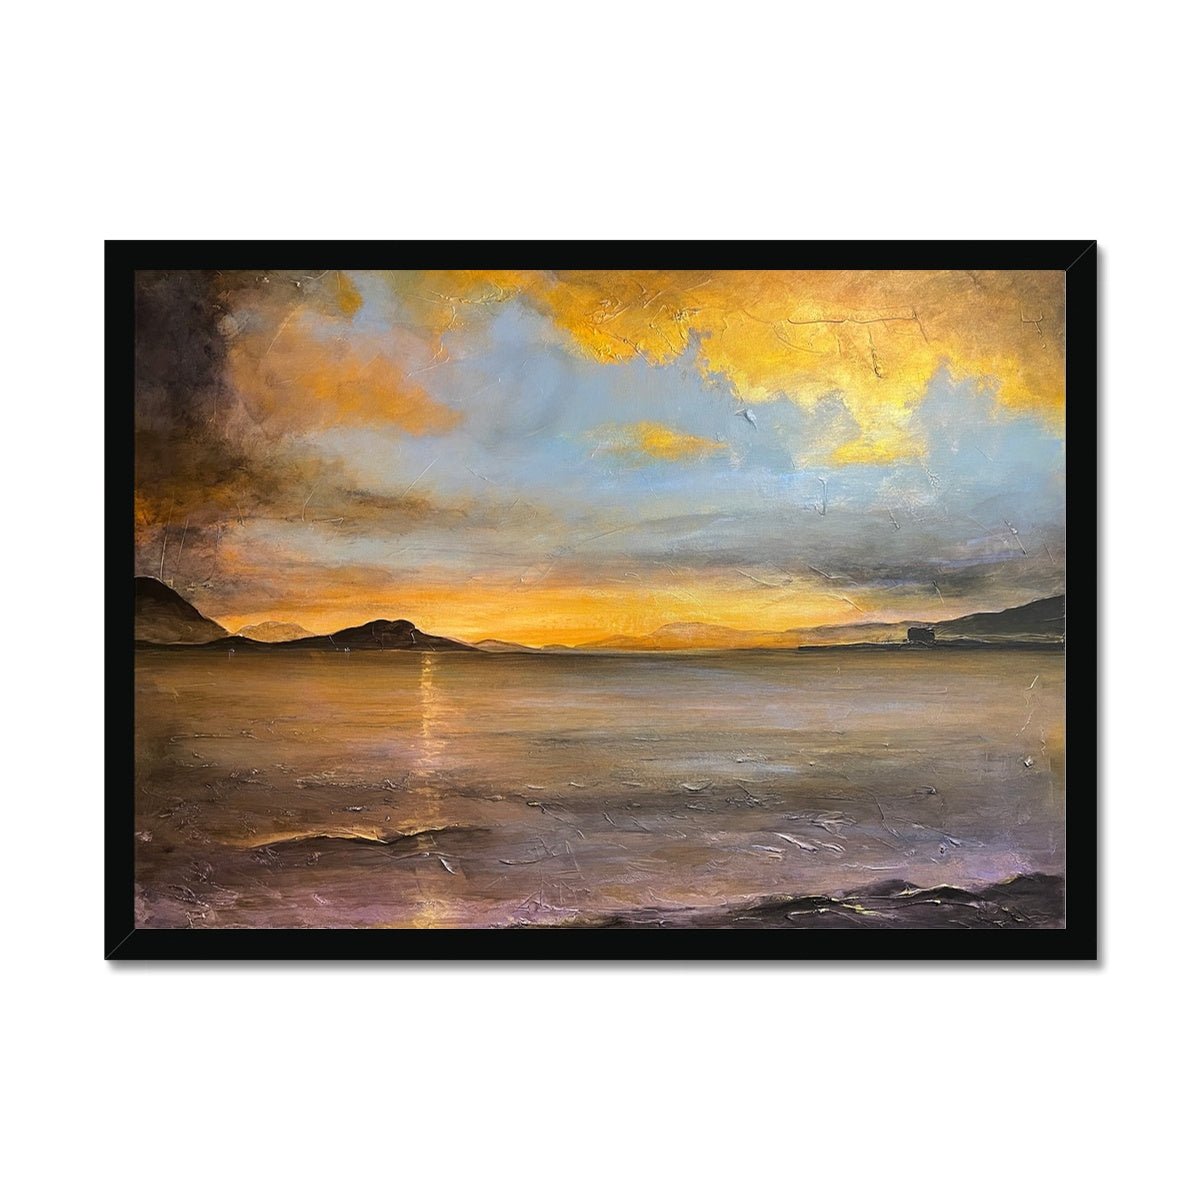 Loch Linnhe Sunset Painting | Framed Prints From Scotland-Framed Prints-Scottish Lochs & Mountains Art Gallery-A2 Landscape-Black Frame-Paintings, Prints, Homeware, Art Gifts From Scotland By Scottish Artist Kevin Hunter